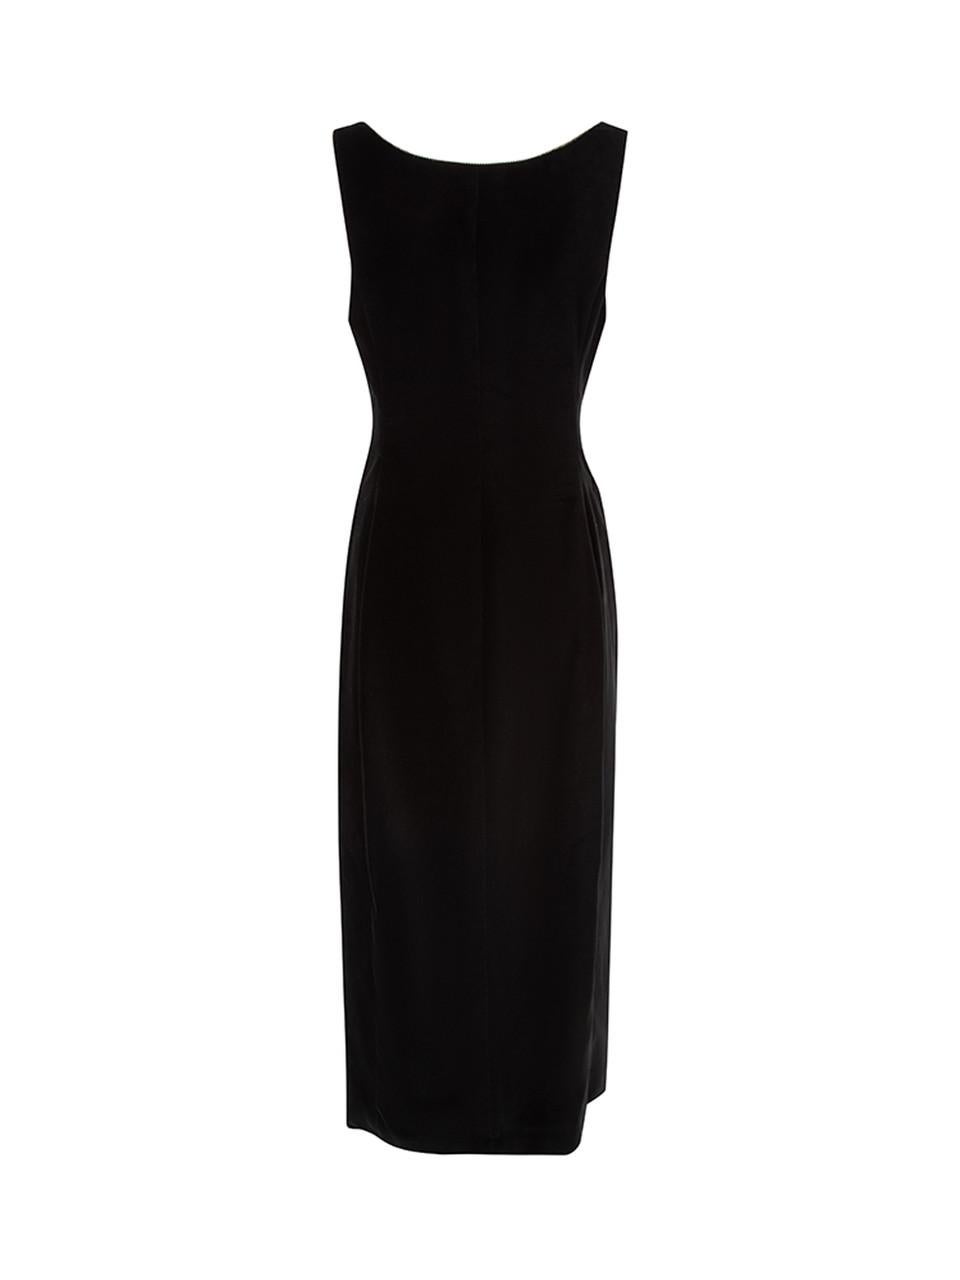 Sanne Black Velvet Embellished Midi Dress Size S In Good Condition For Sale In London, GB